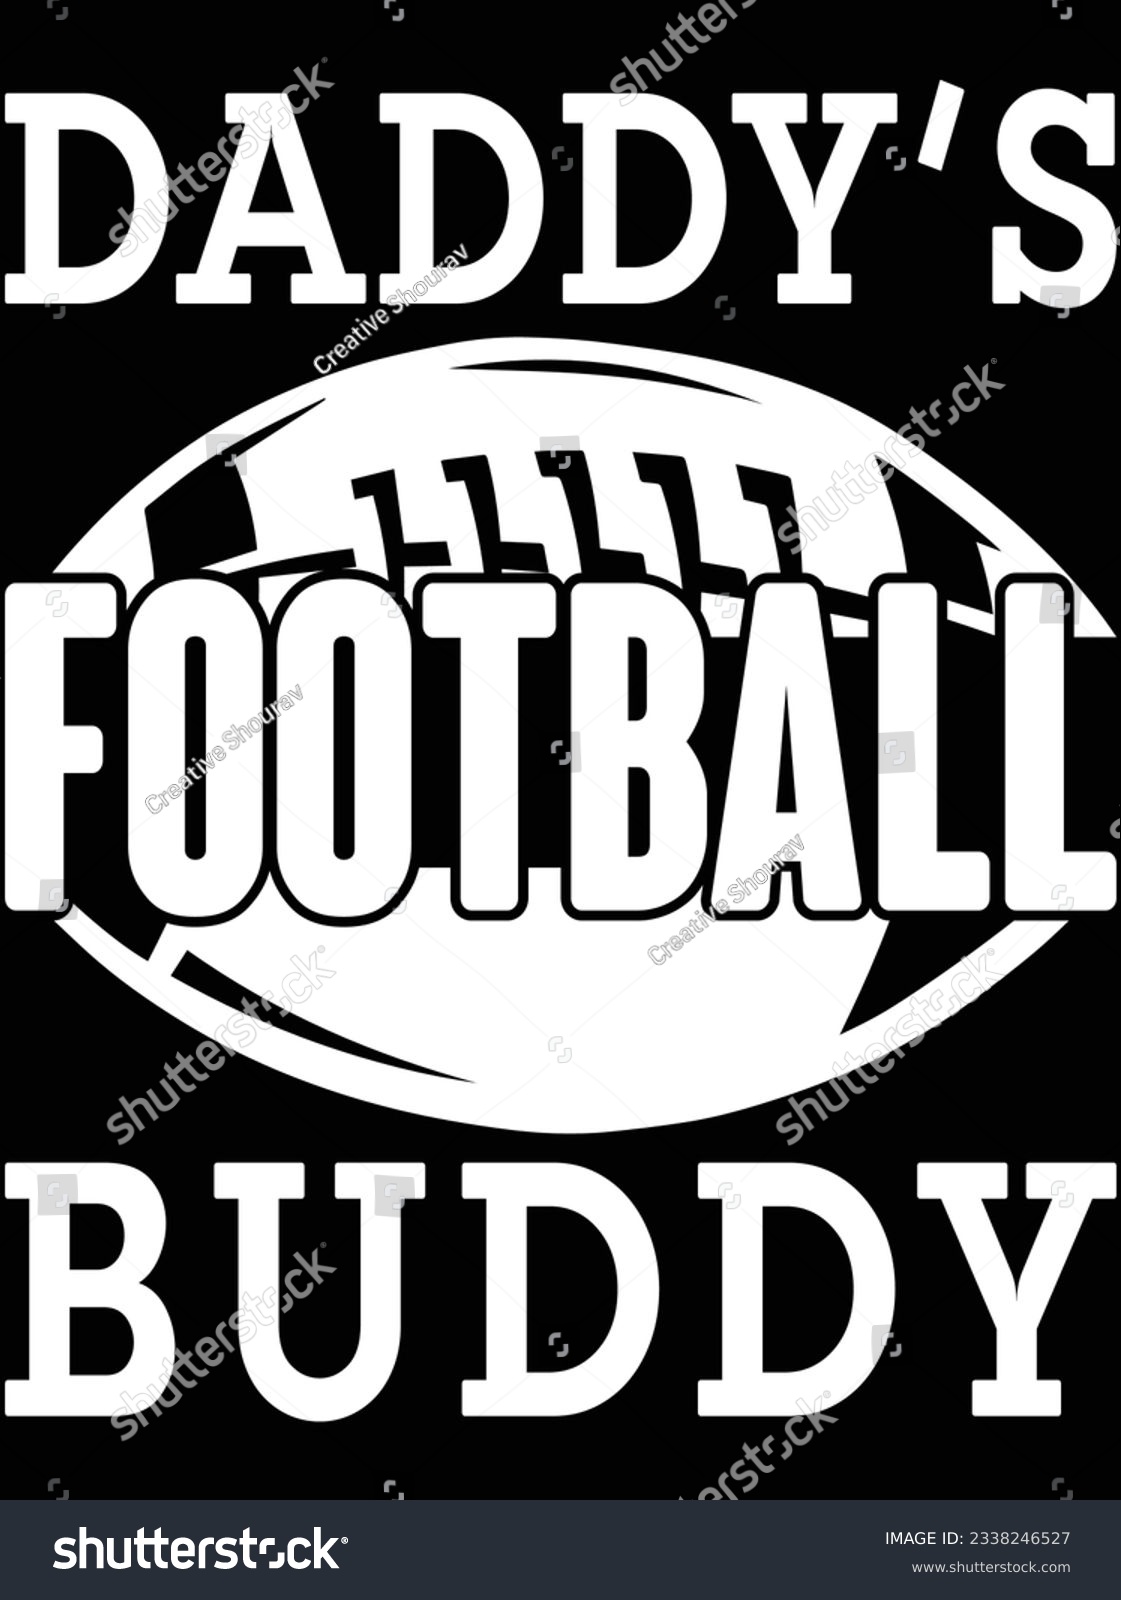 SVG of Daddy's football buddy vector art design, eps file. design file for t-shirt. SVG, EPS cuttable design file svg